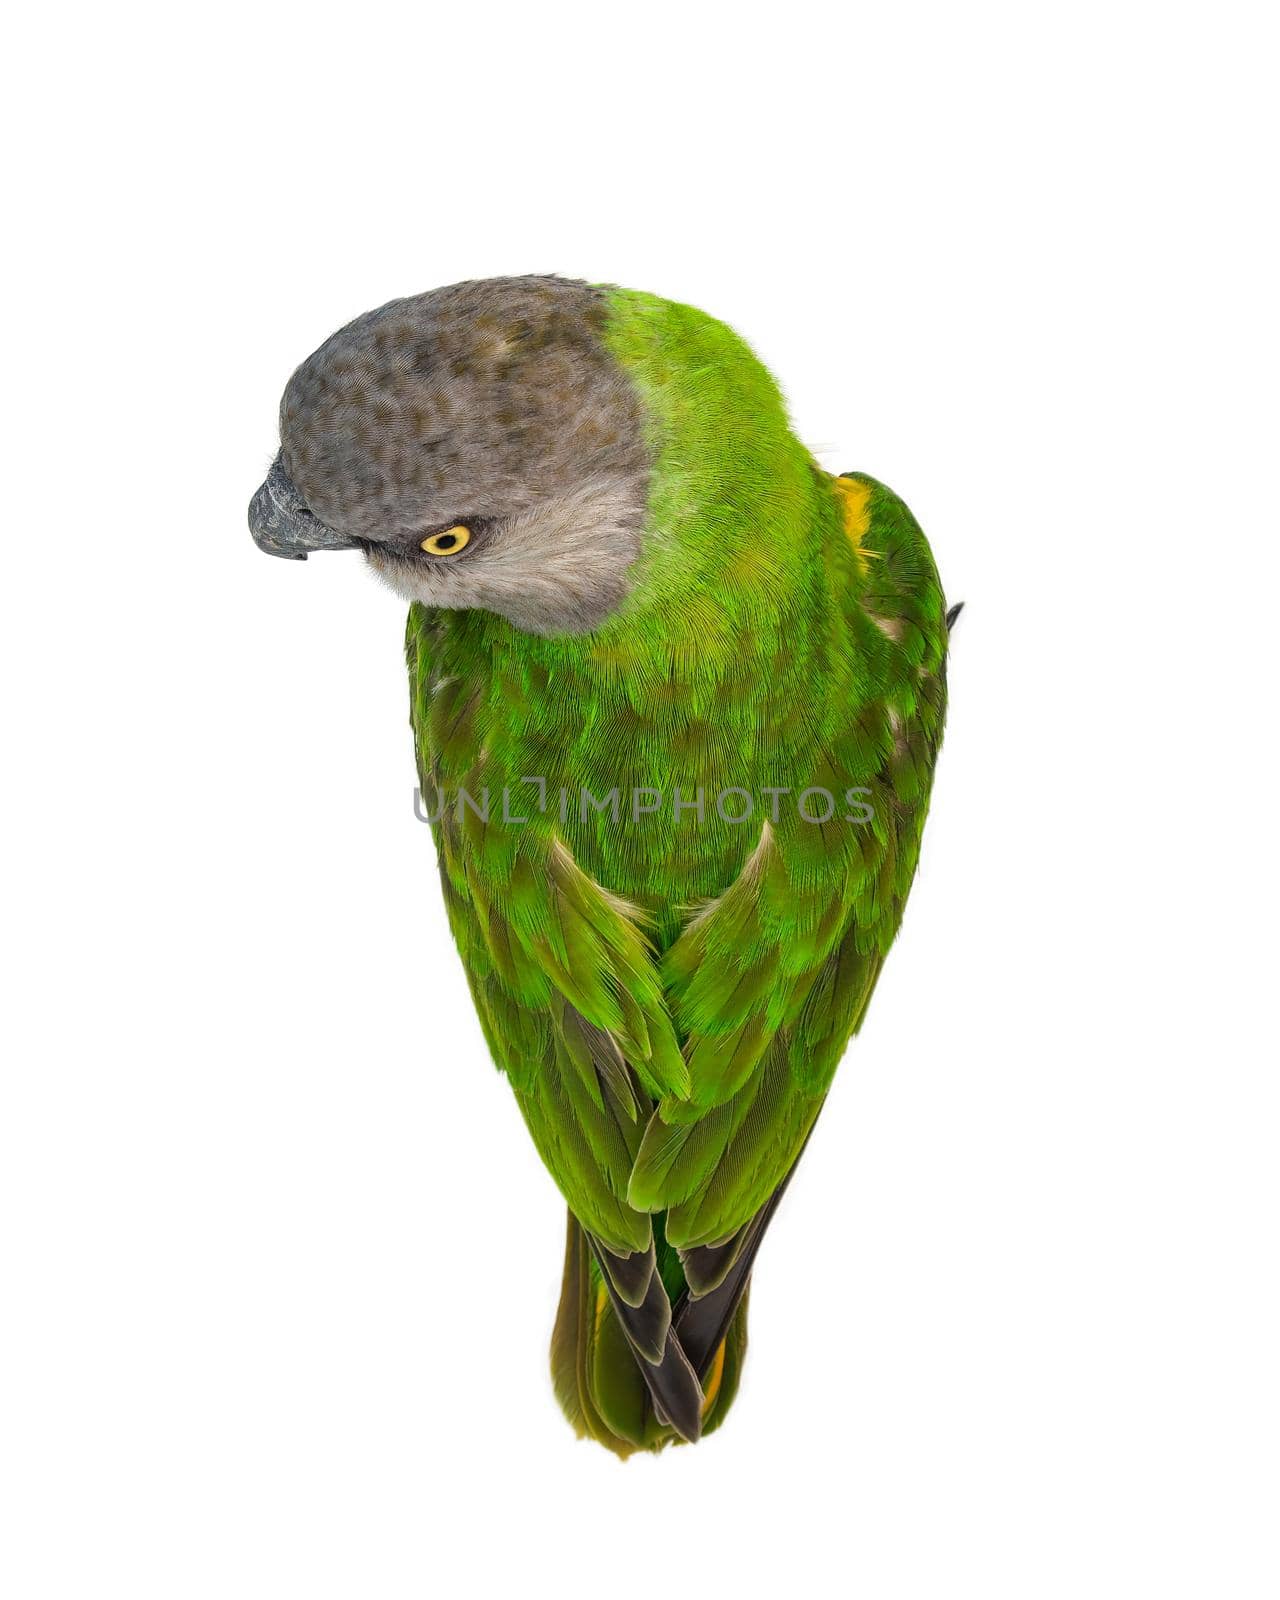 Poicephalus senegalus. Senegal Parrot on white background. by Andre1ns